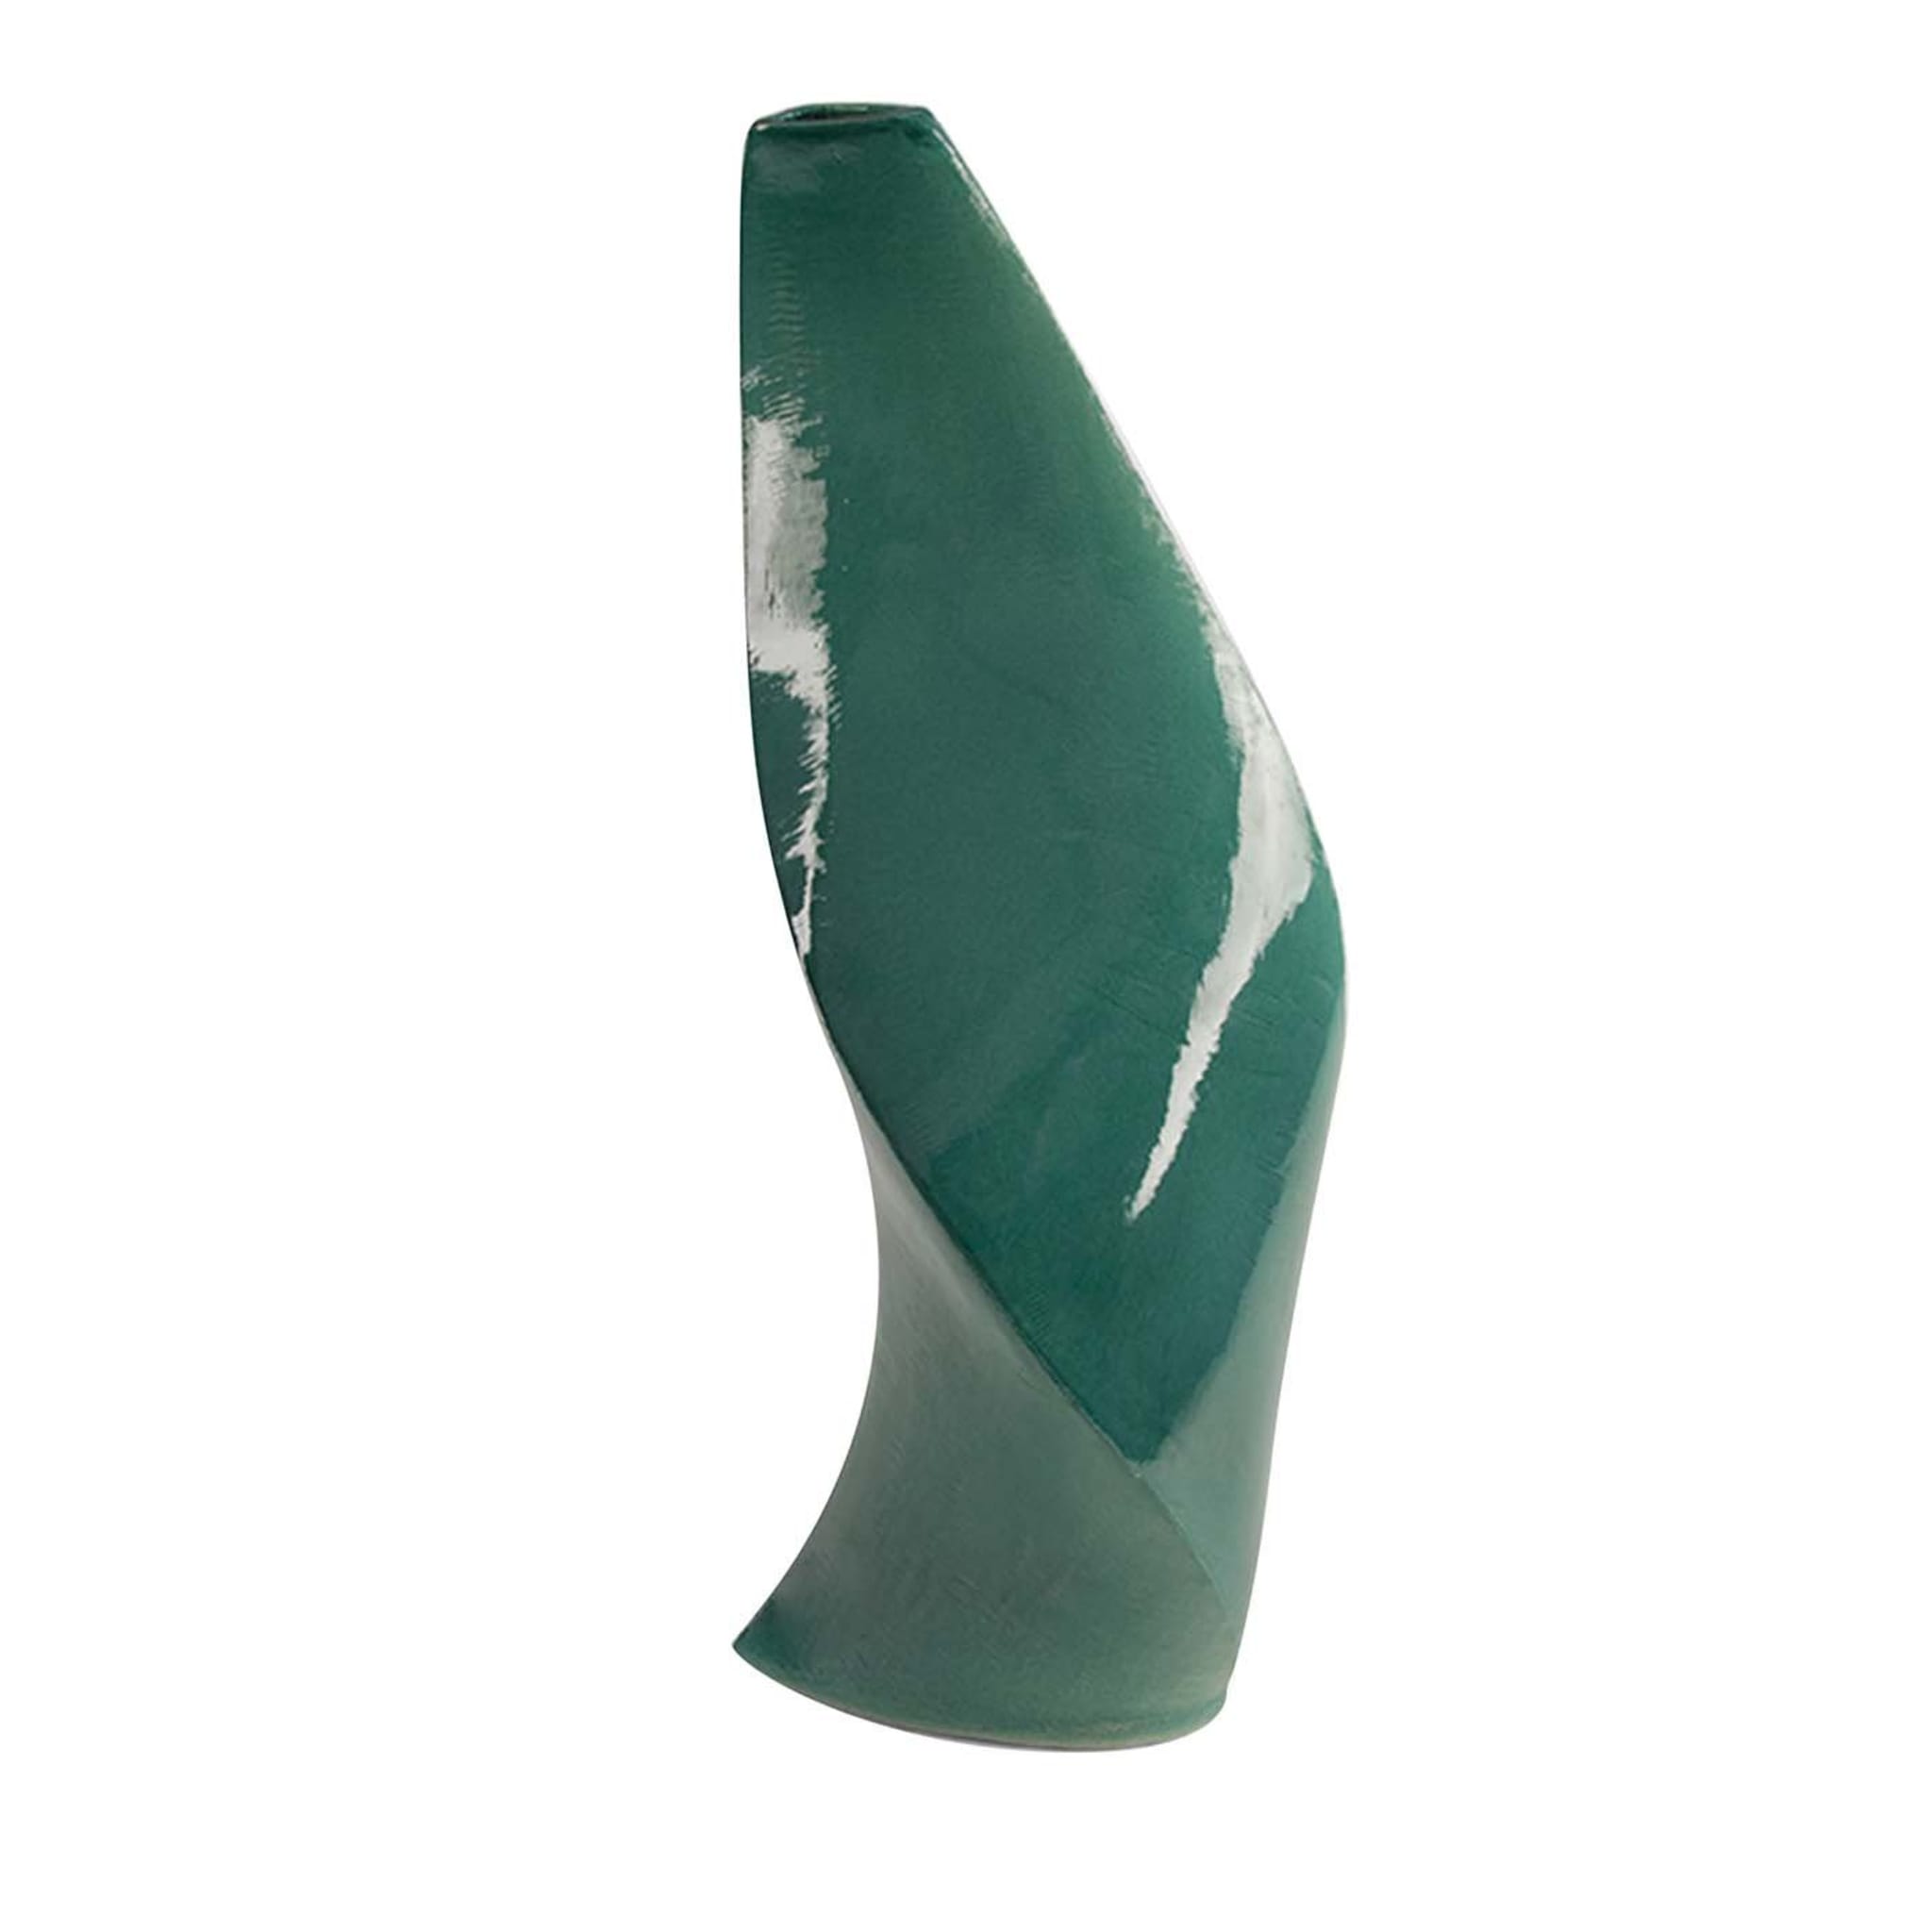 Vaso scultoreo verde Demeter #1 - Vista principale